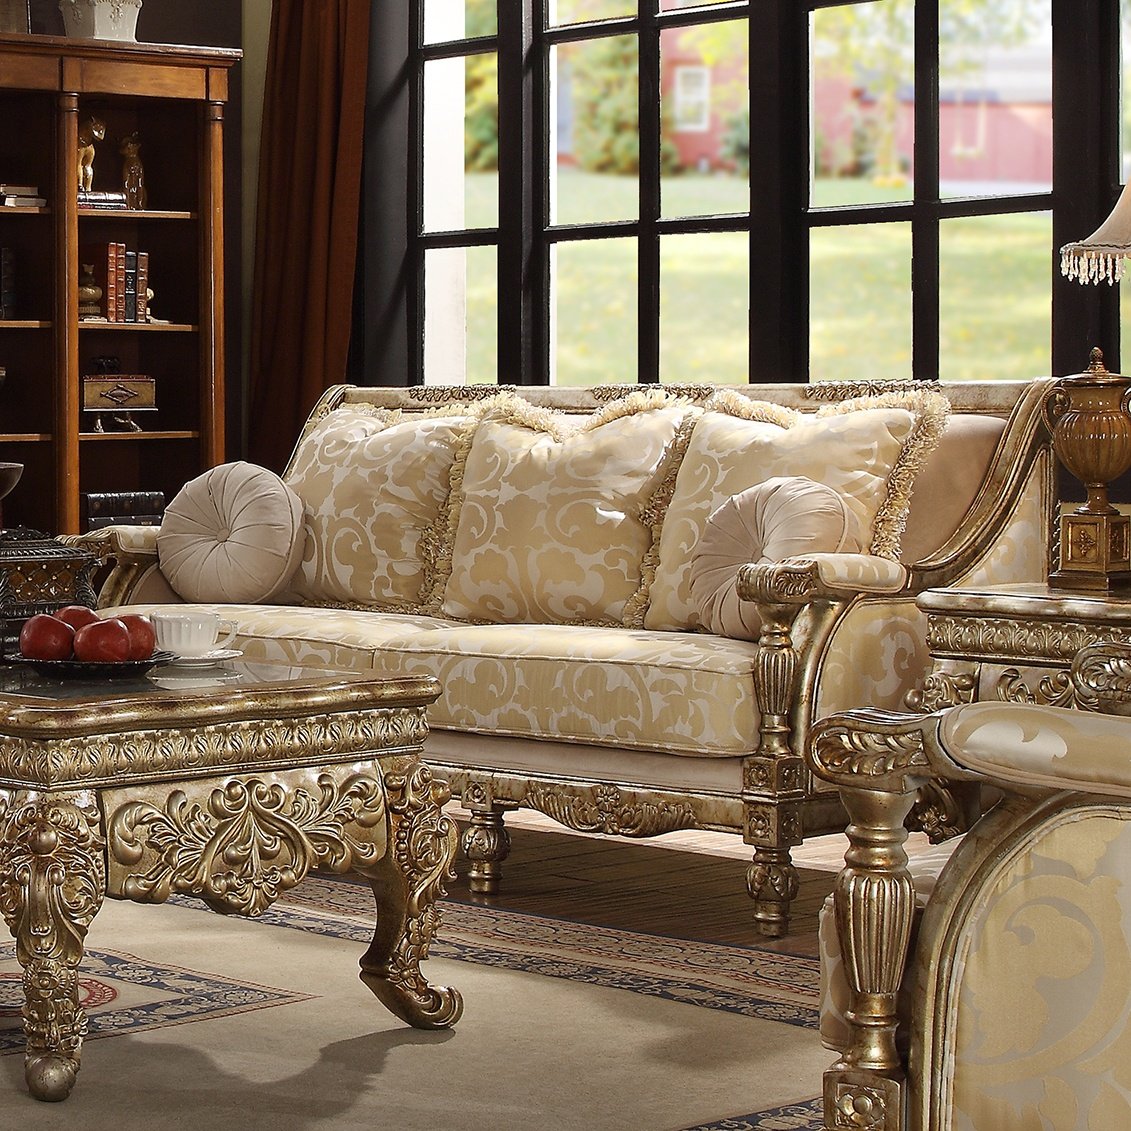 Fabric Sofa in Metallic Bright Gold Finish S205 European Traditional Victorian